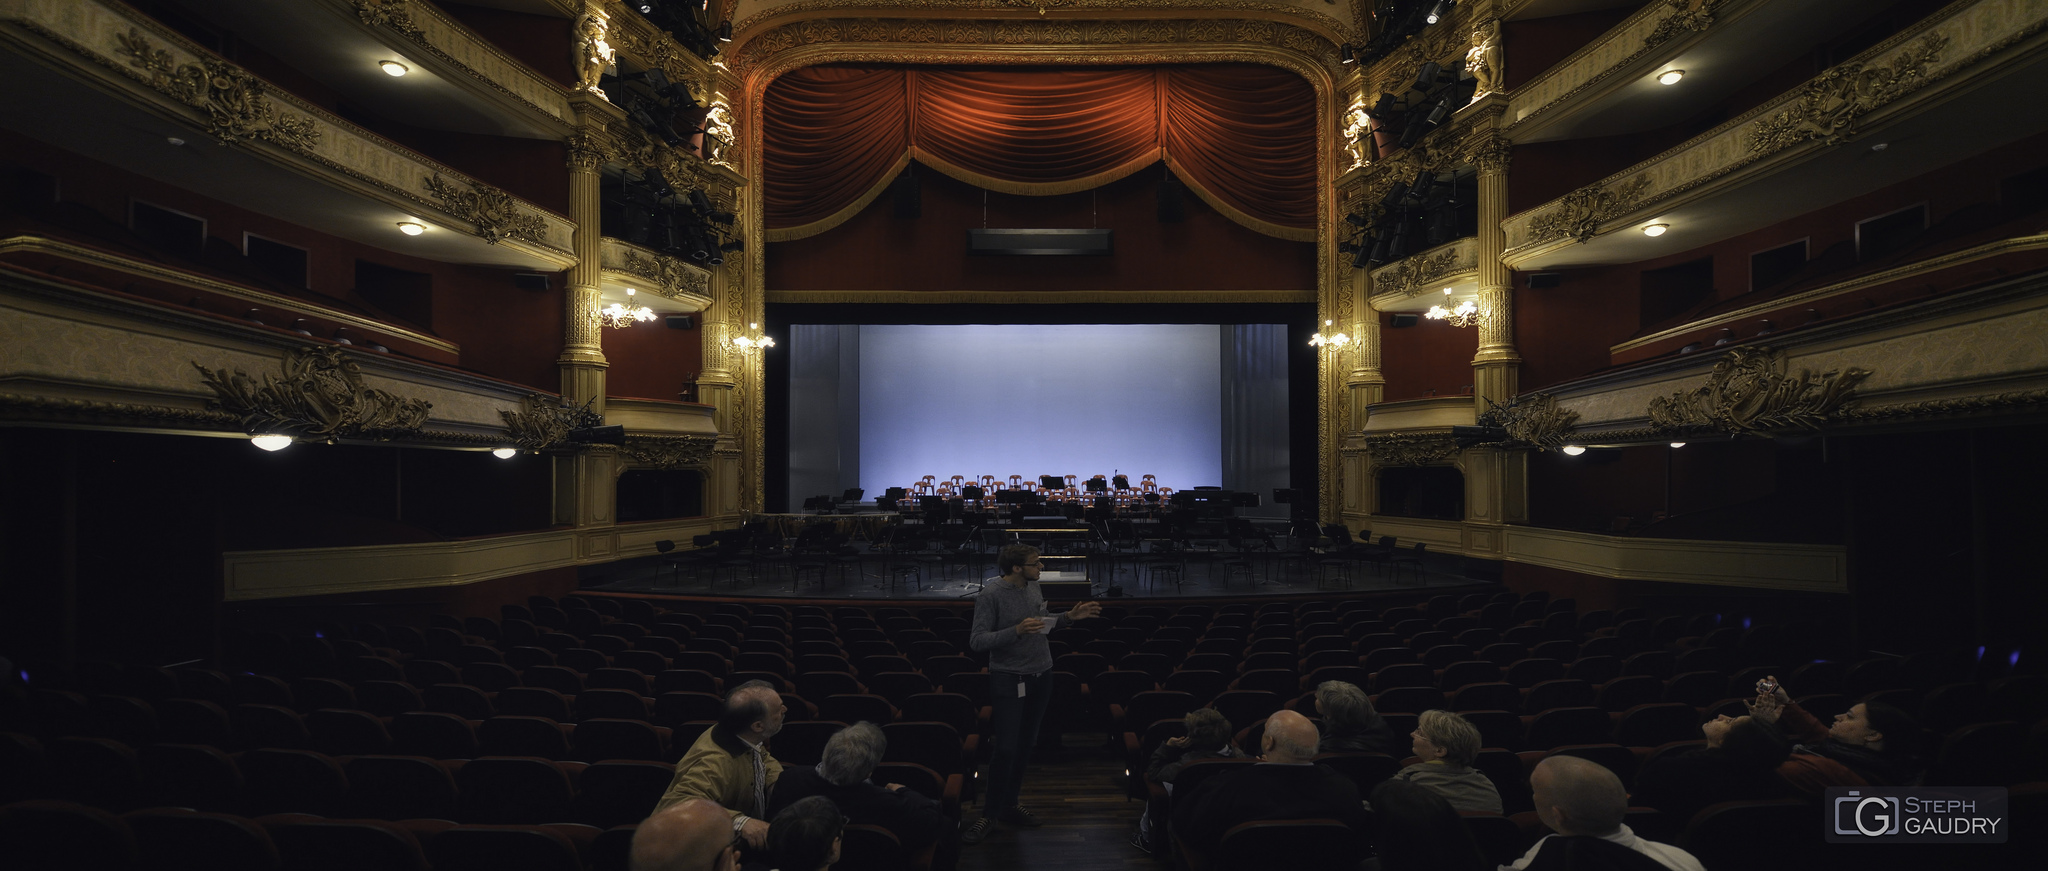 Opéra Royal de Wallonie-Liège [Click to start slideshow]